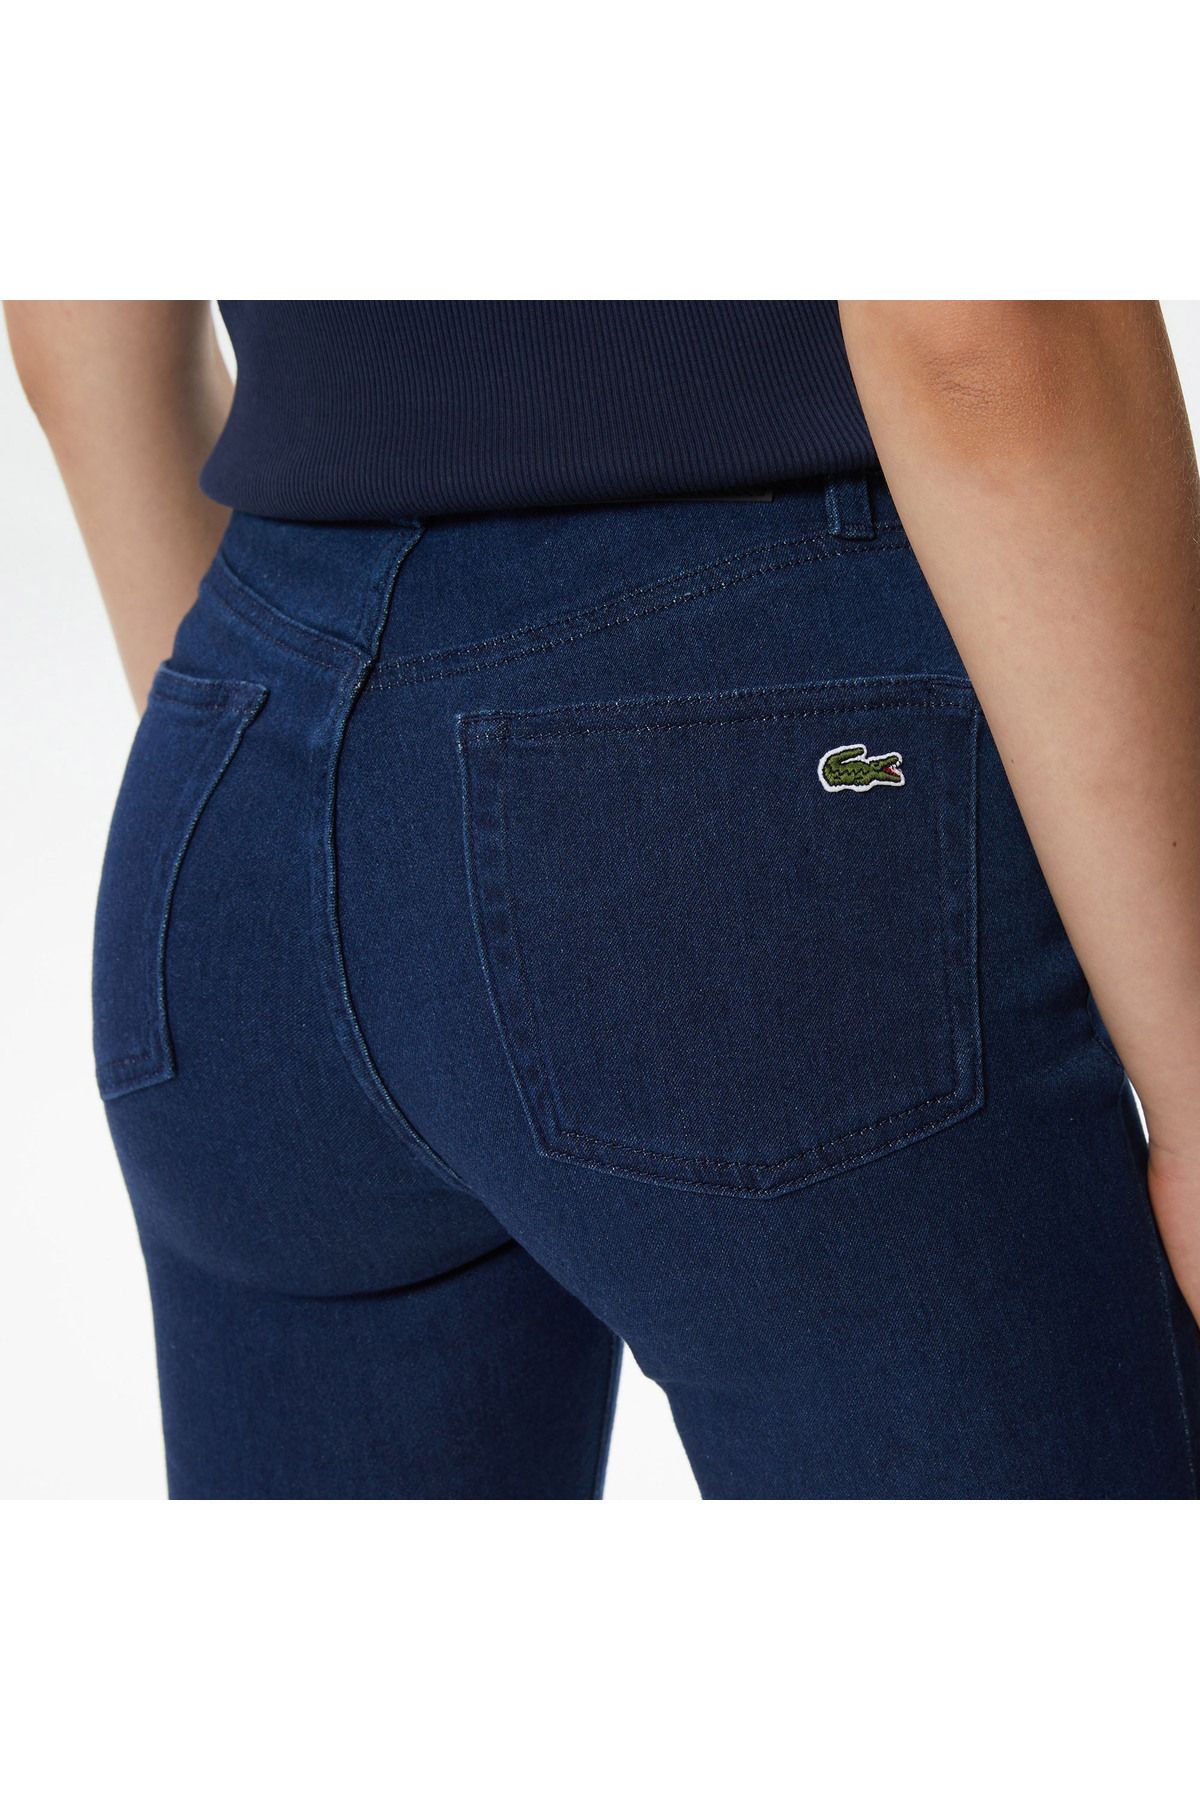 Lacoste شلوار جین مناسب زنانه